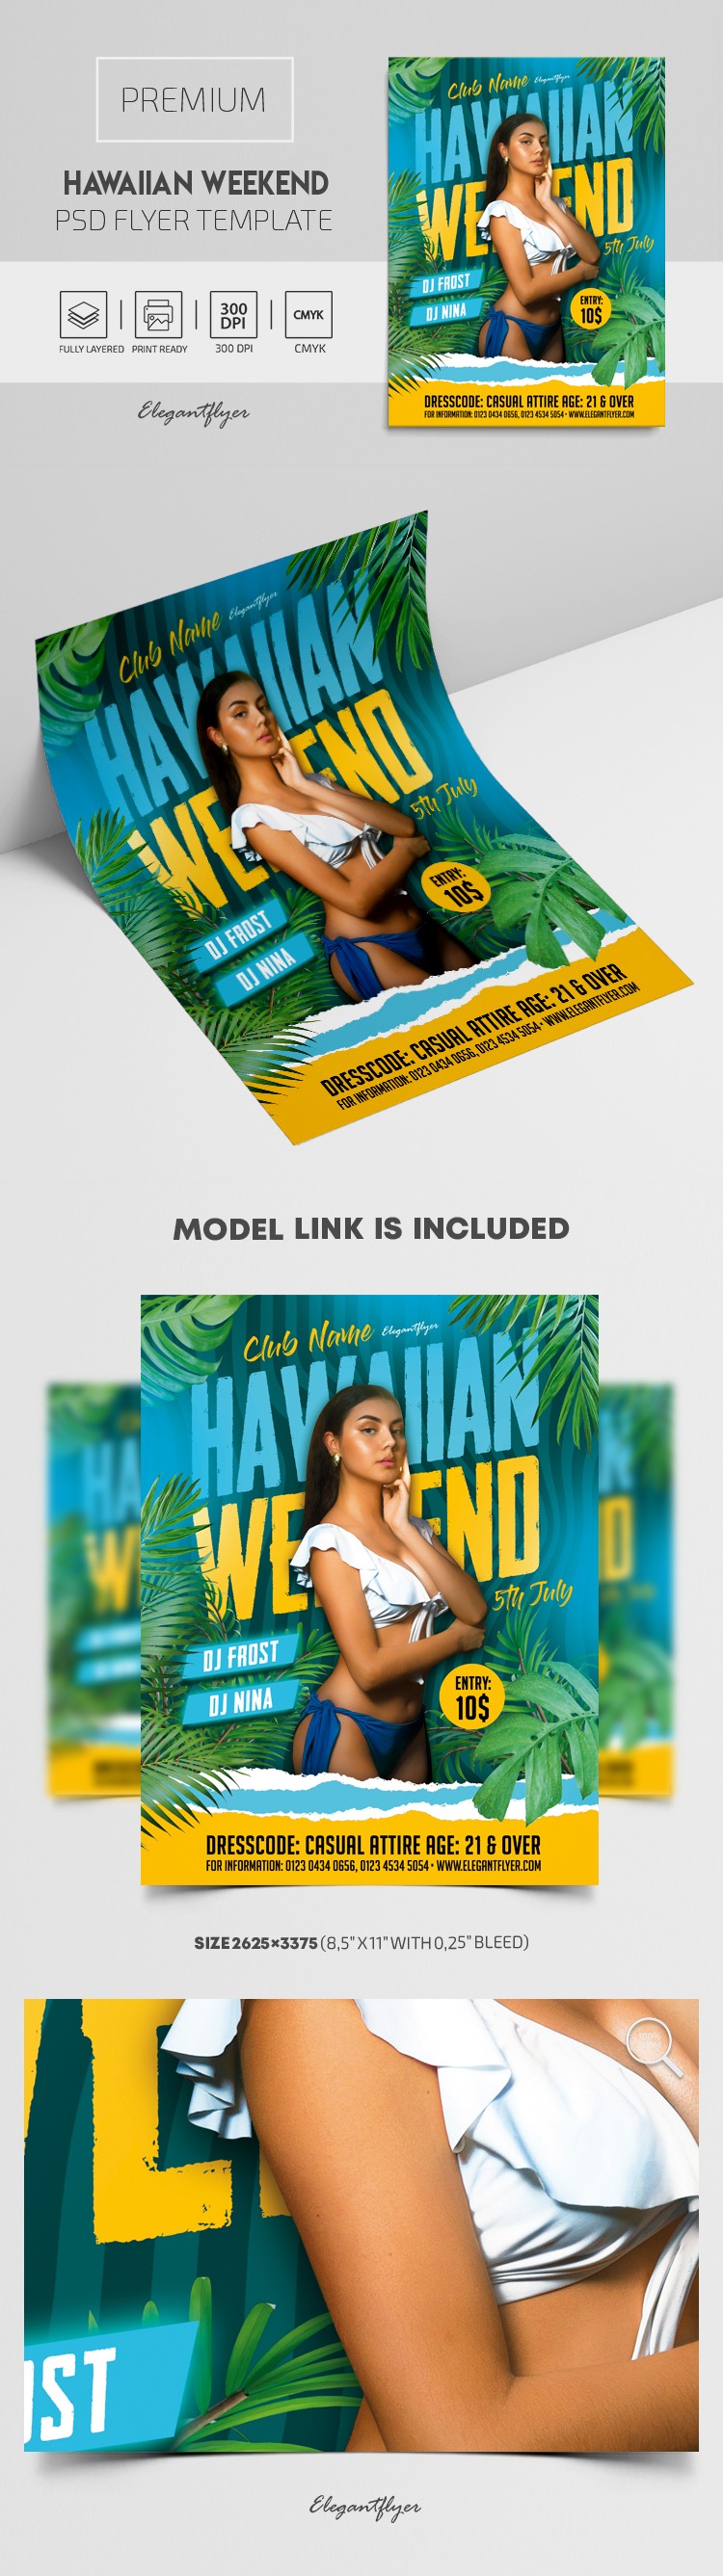 Hawaiian Weekend Flyer by ElegantFlyer